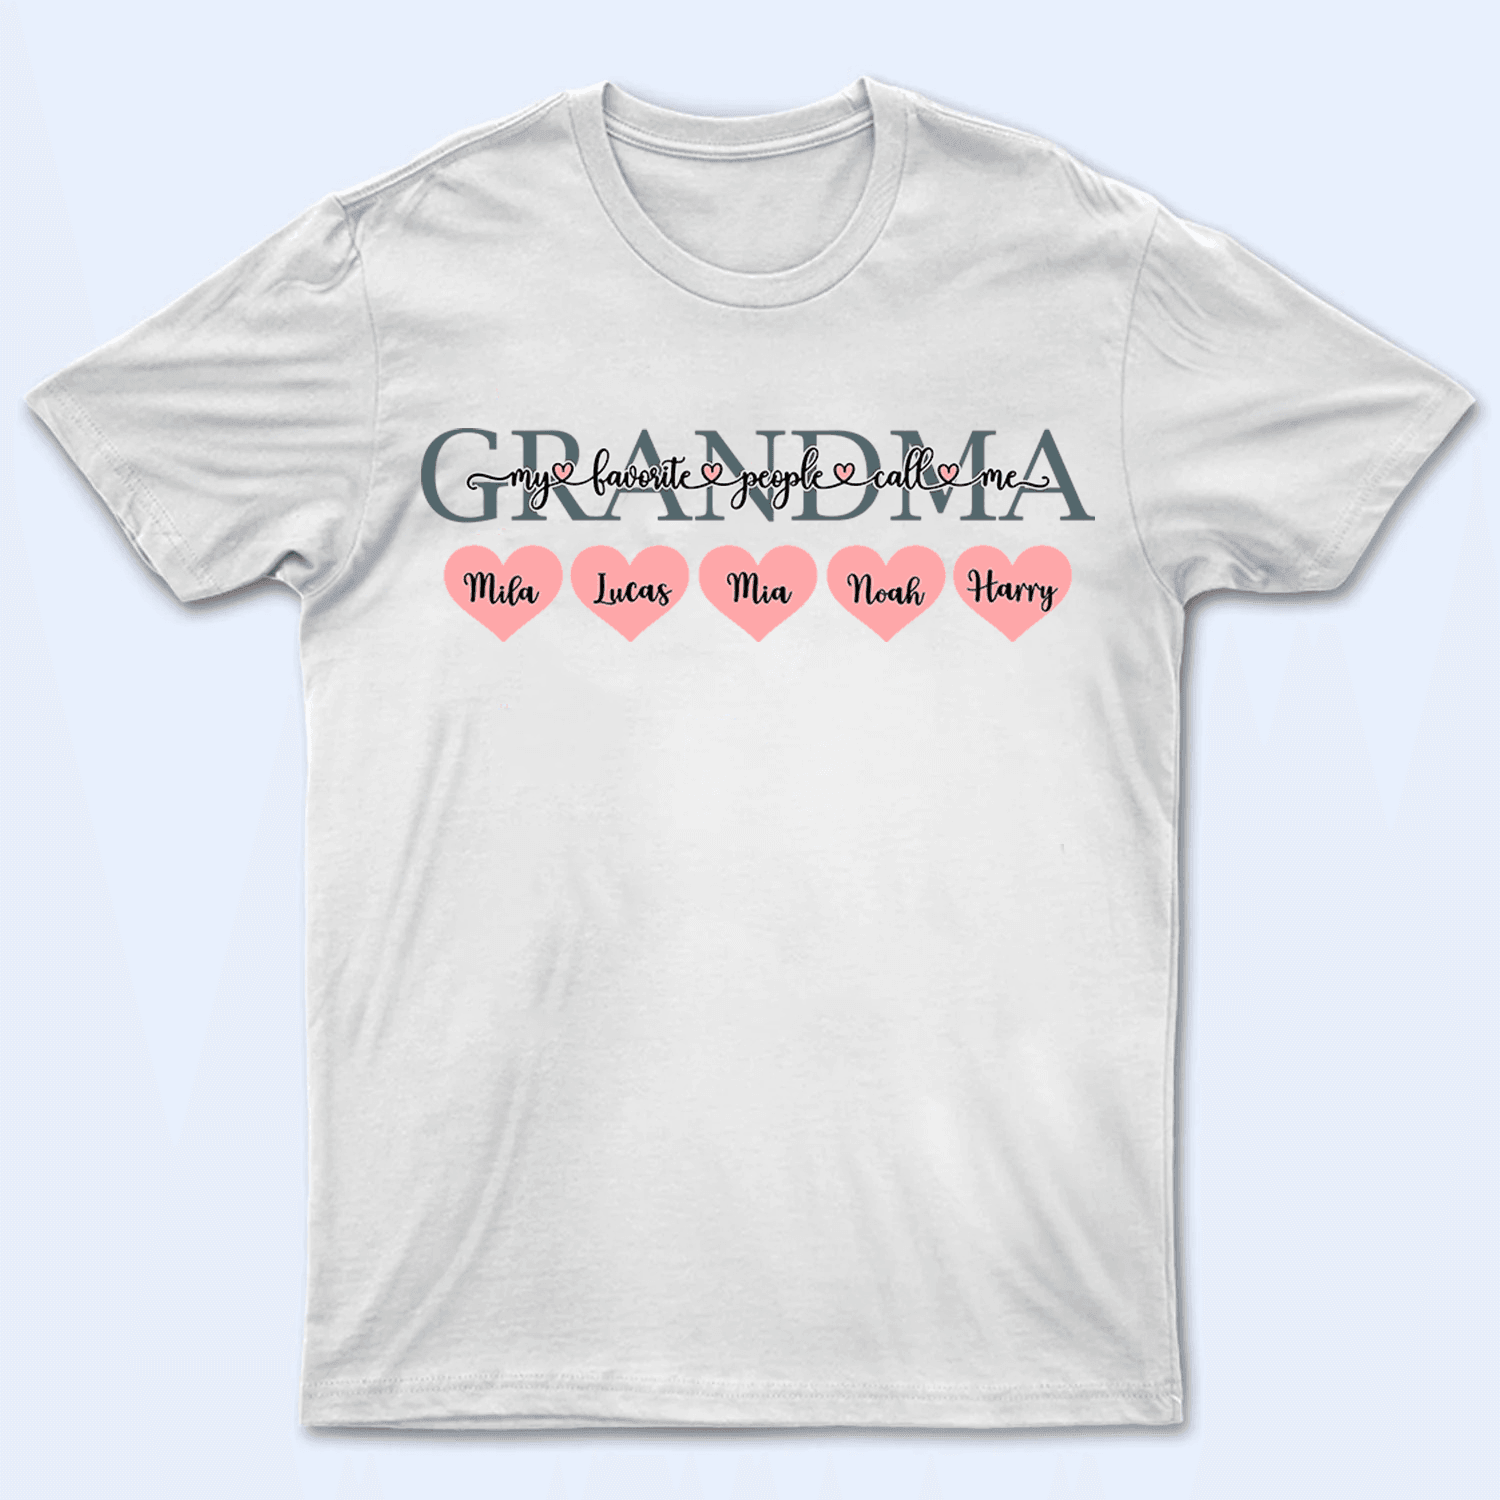 My Favorite People Call Me Grandma - Personalized Custom T Shirt - Birthday, Loving, Funny Gift for Grandma/Nana/Mimi, Mom, Wife, Grandparent - Suzitee Store